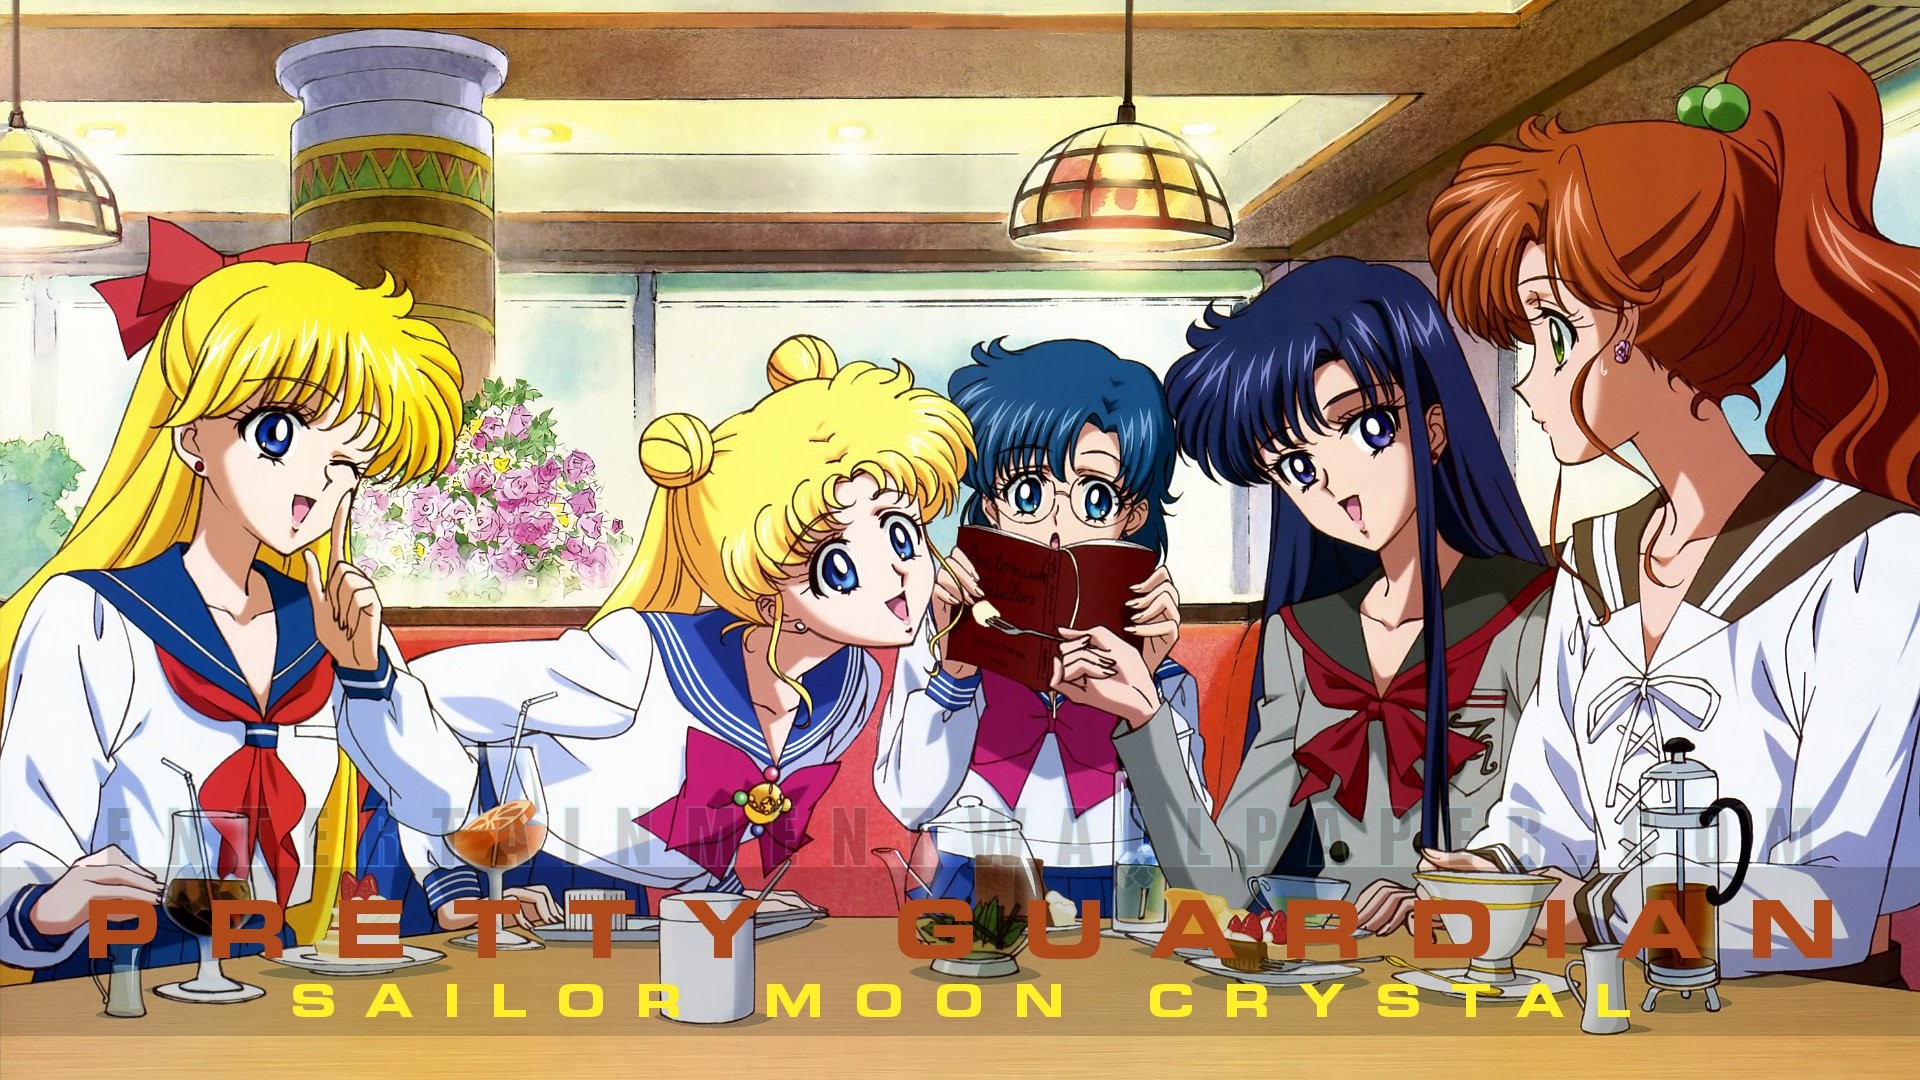 Pretty Guardian Sailor Moon Crystal Wallpaper – Original size, download now